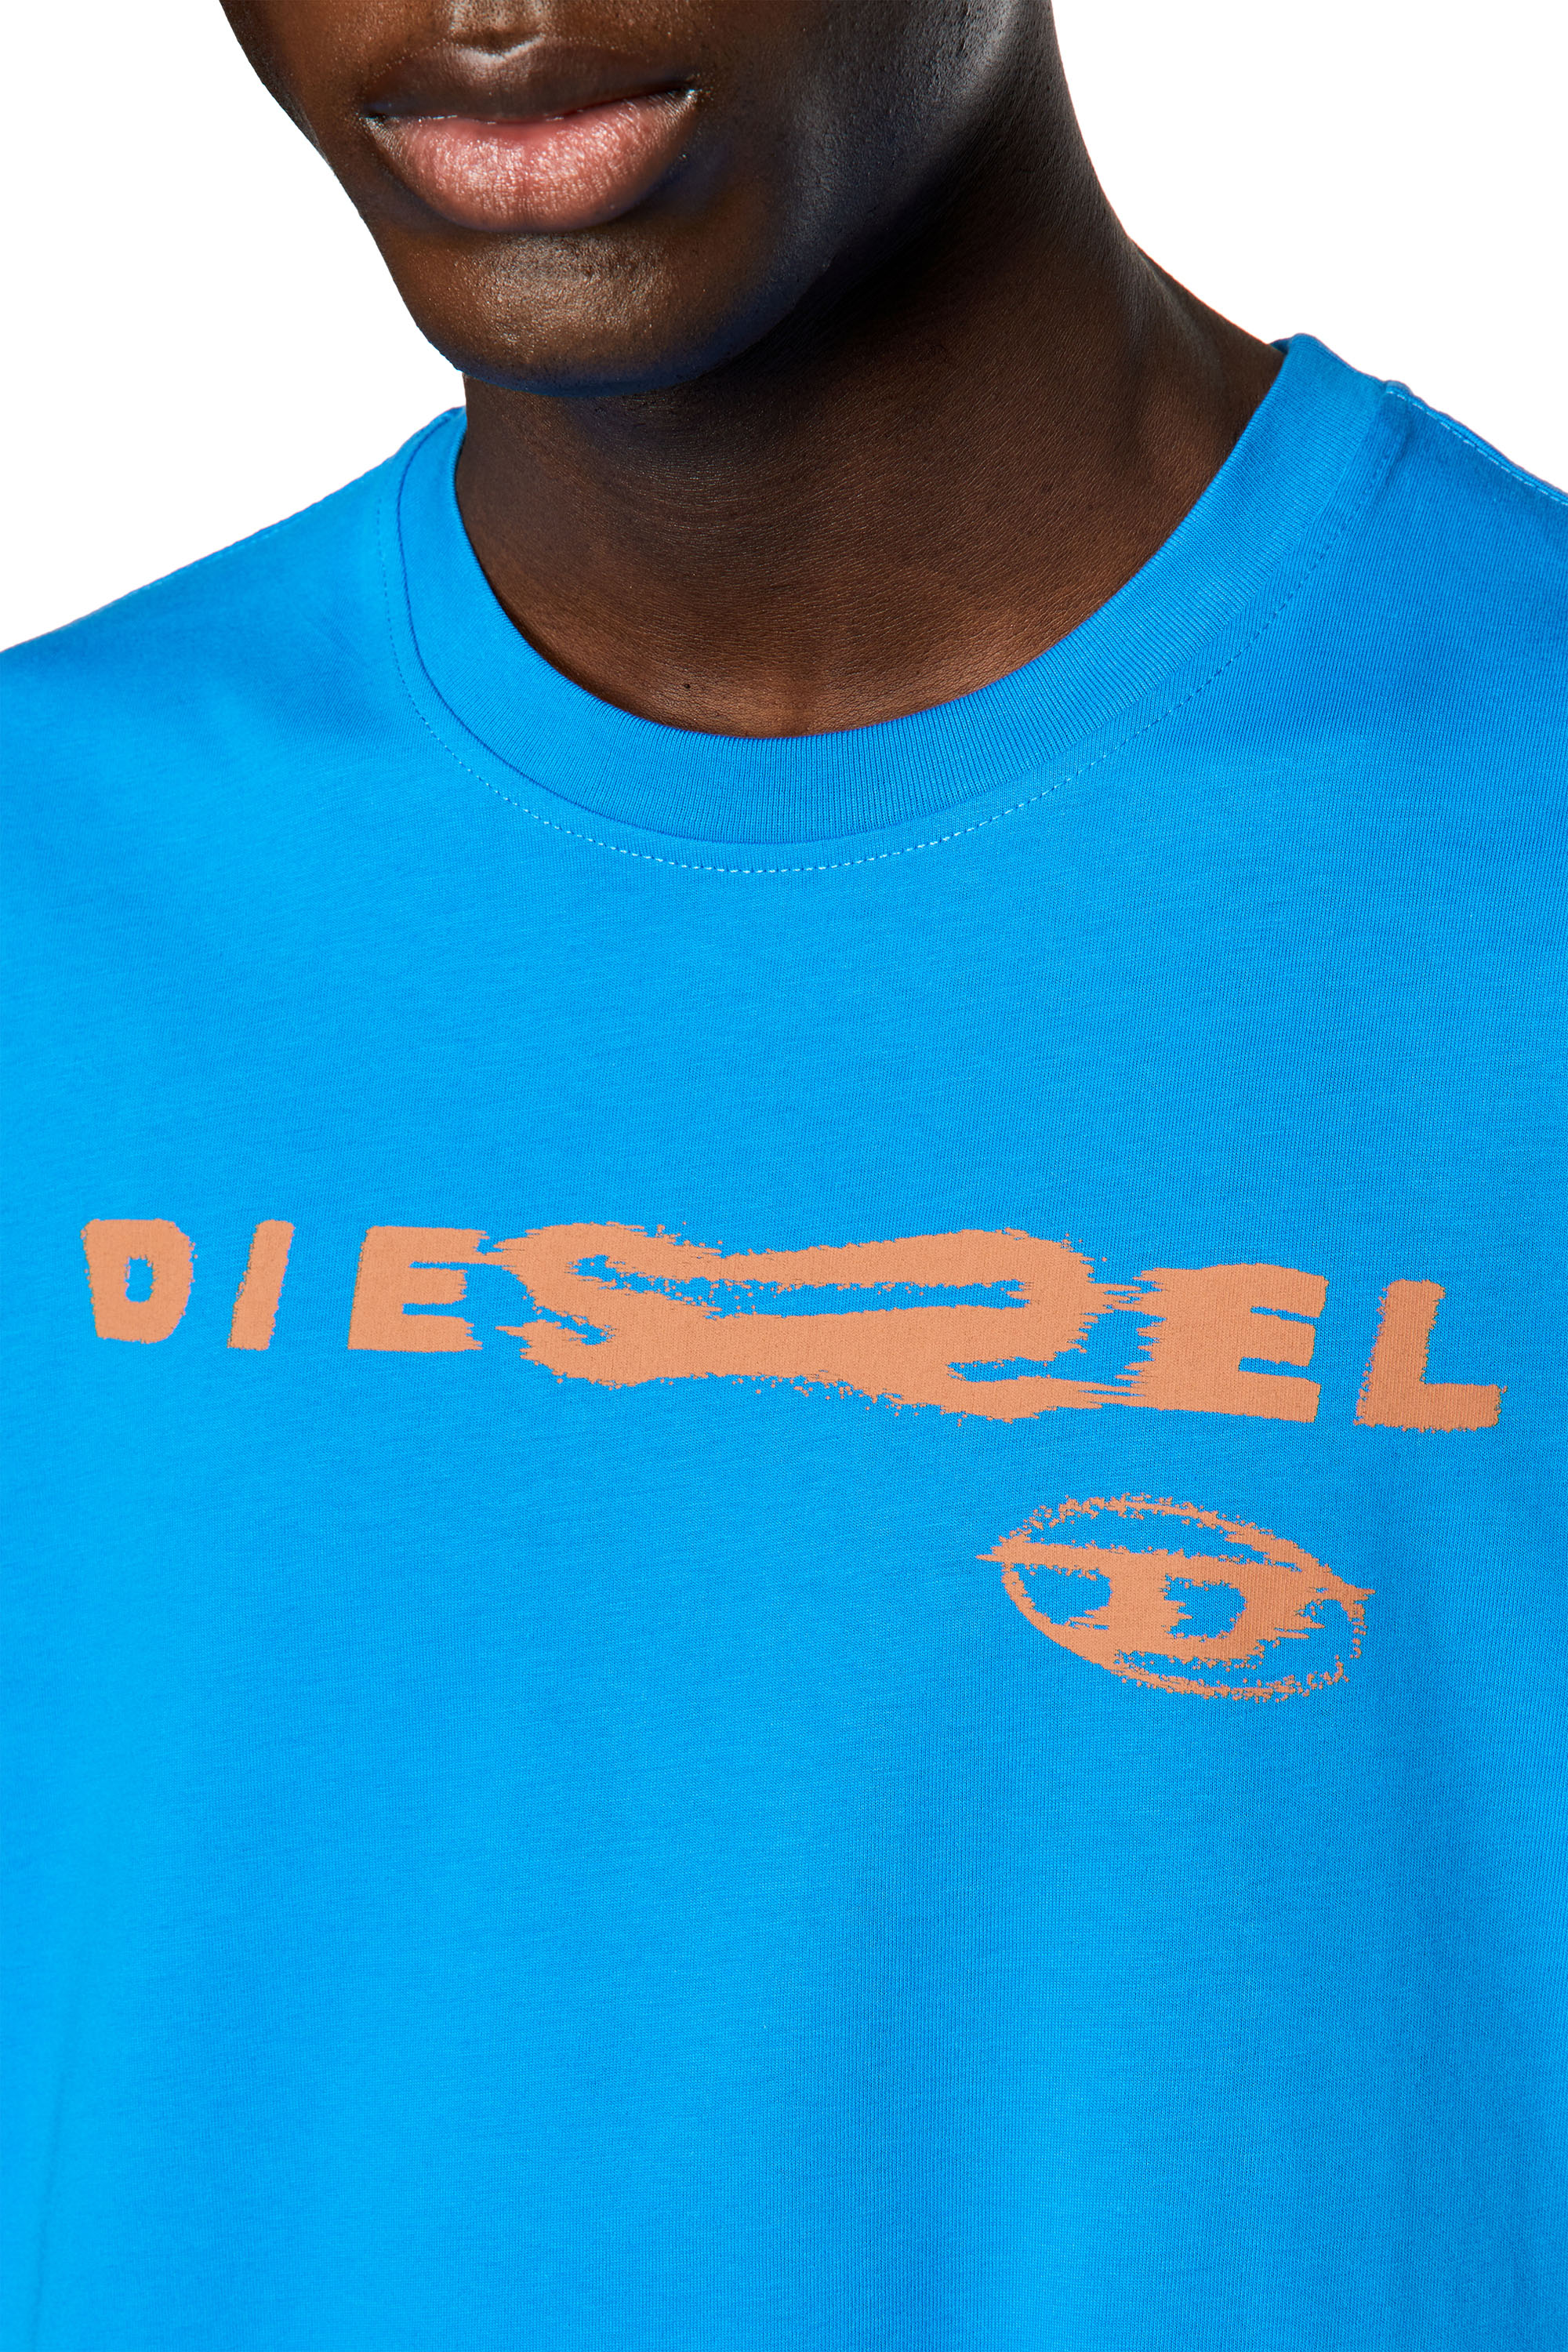 Diesel - T-JUST-G9, Blue - Image 3